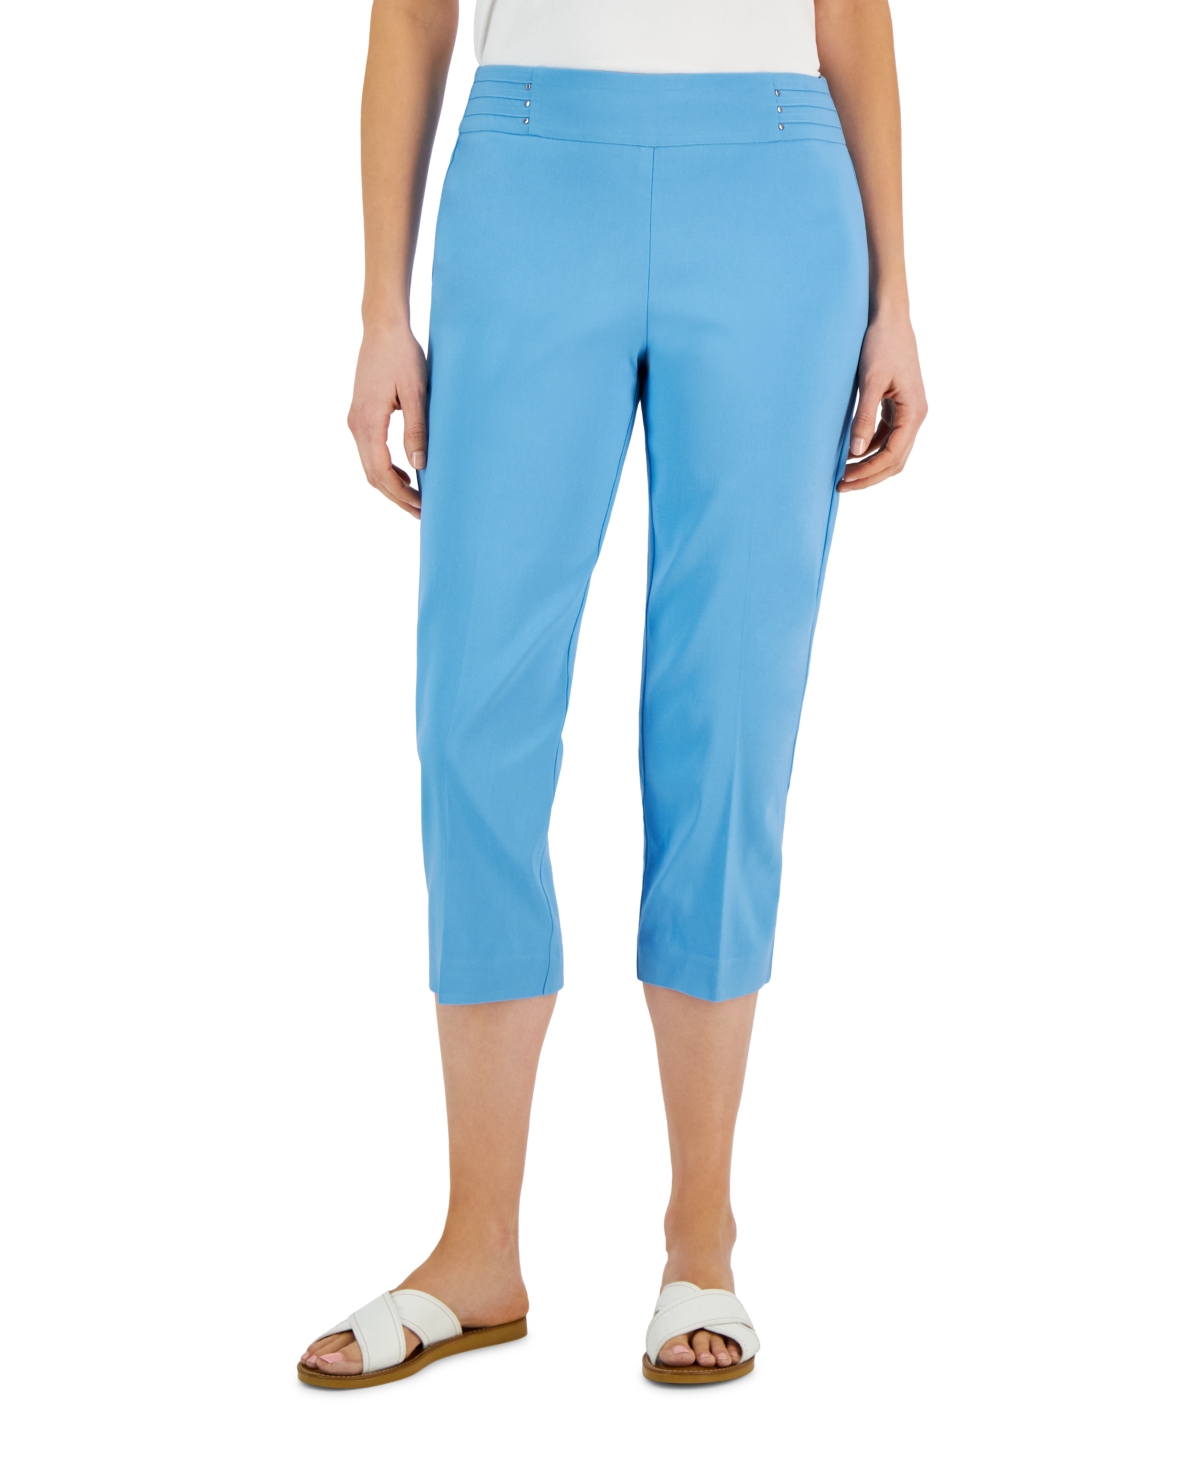 Women's Pull-On Drawstring Capri Pants, Created for Macy's